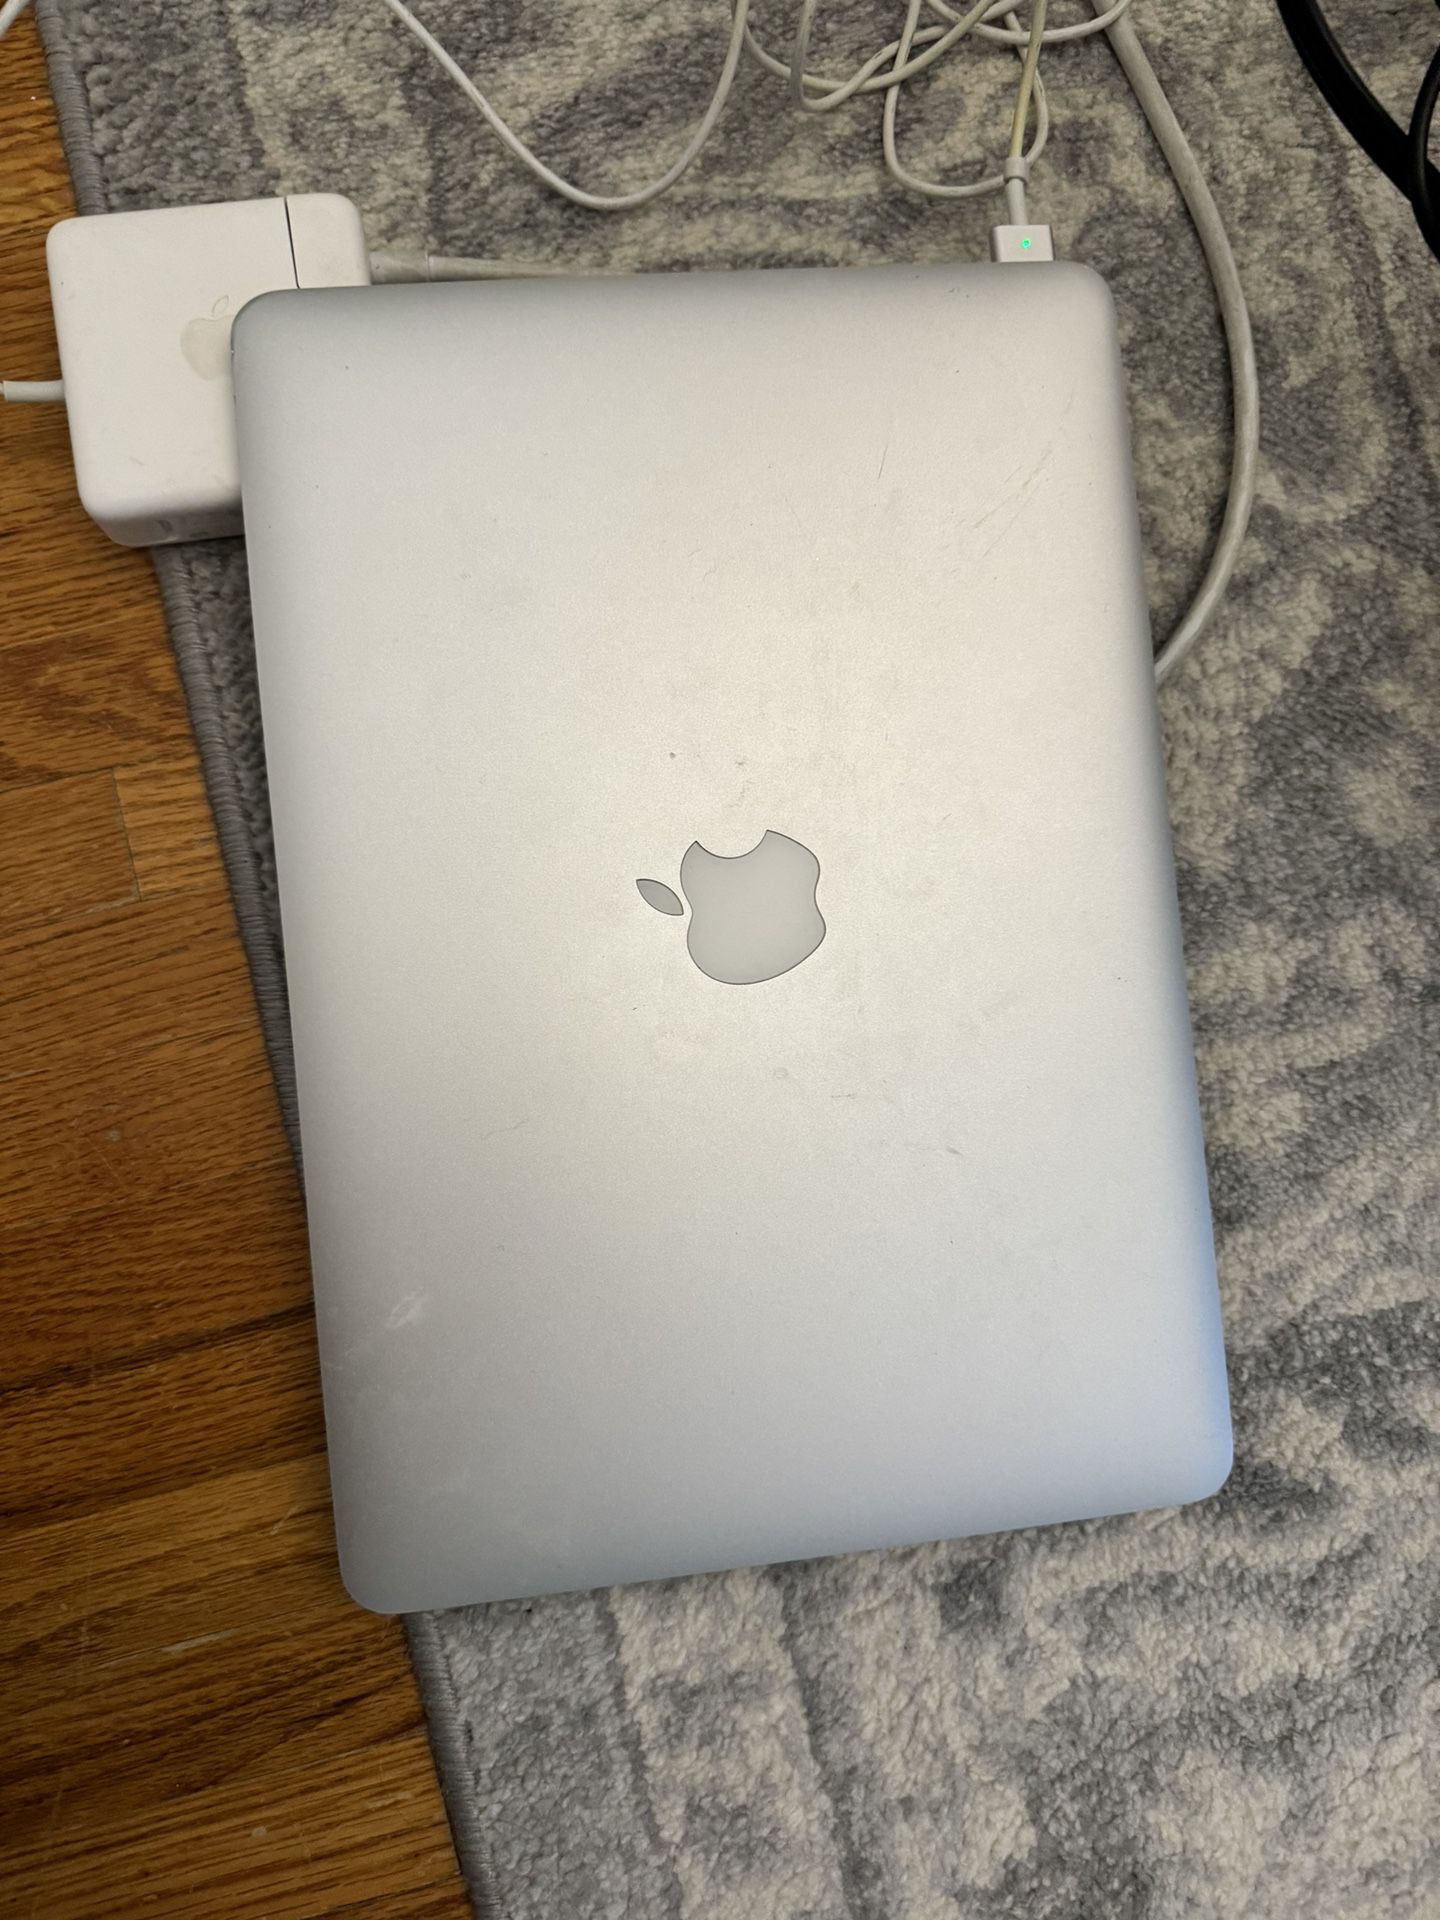 MacBook Air 13 Inch - 2015